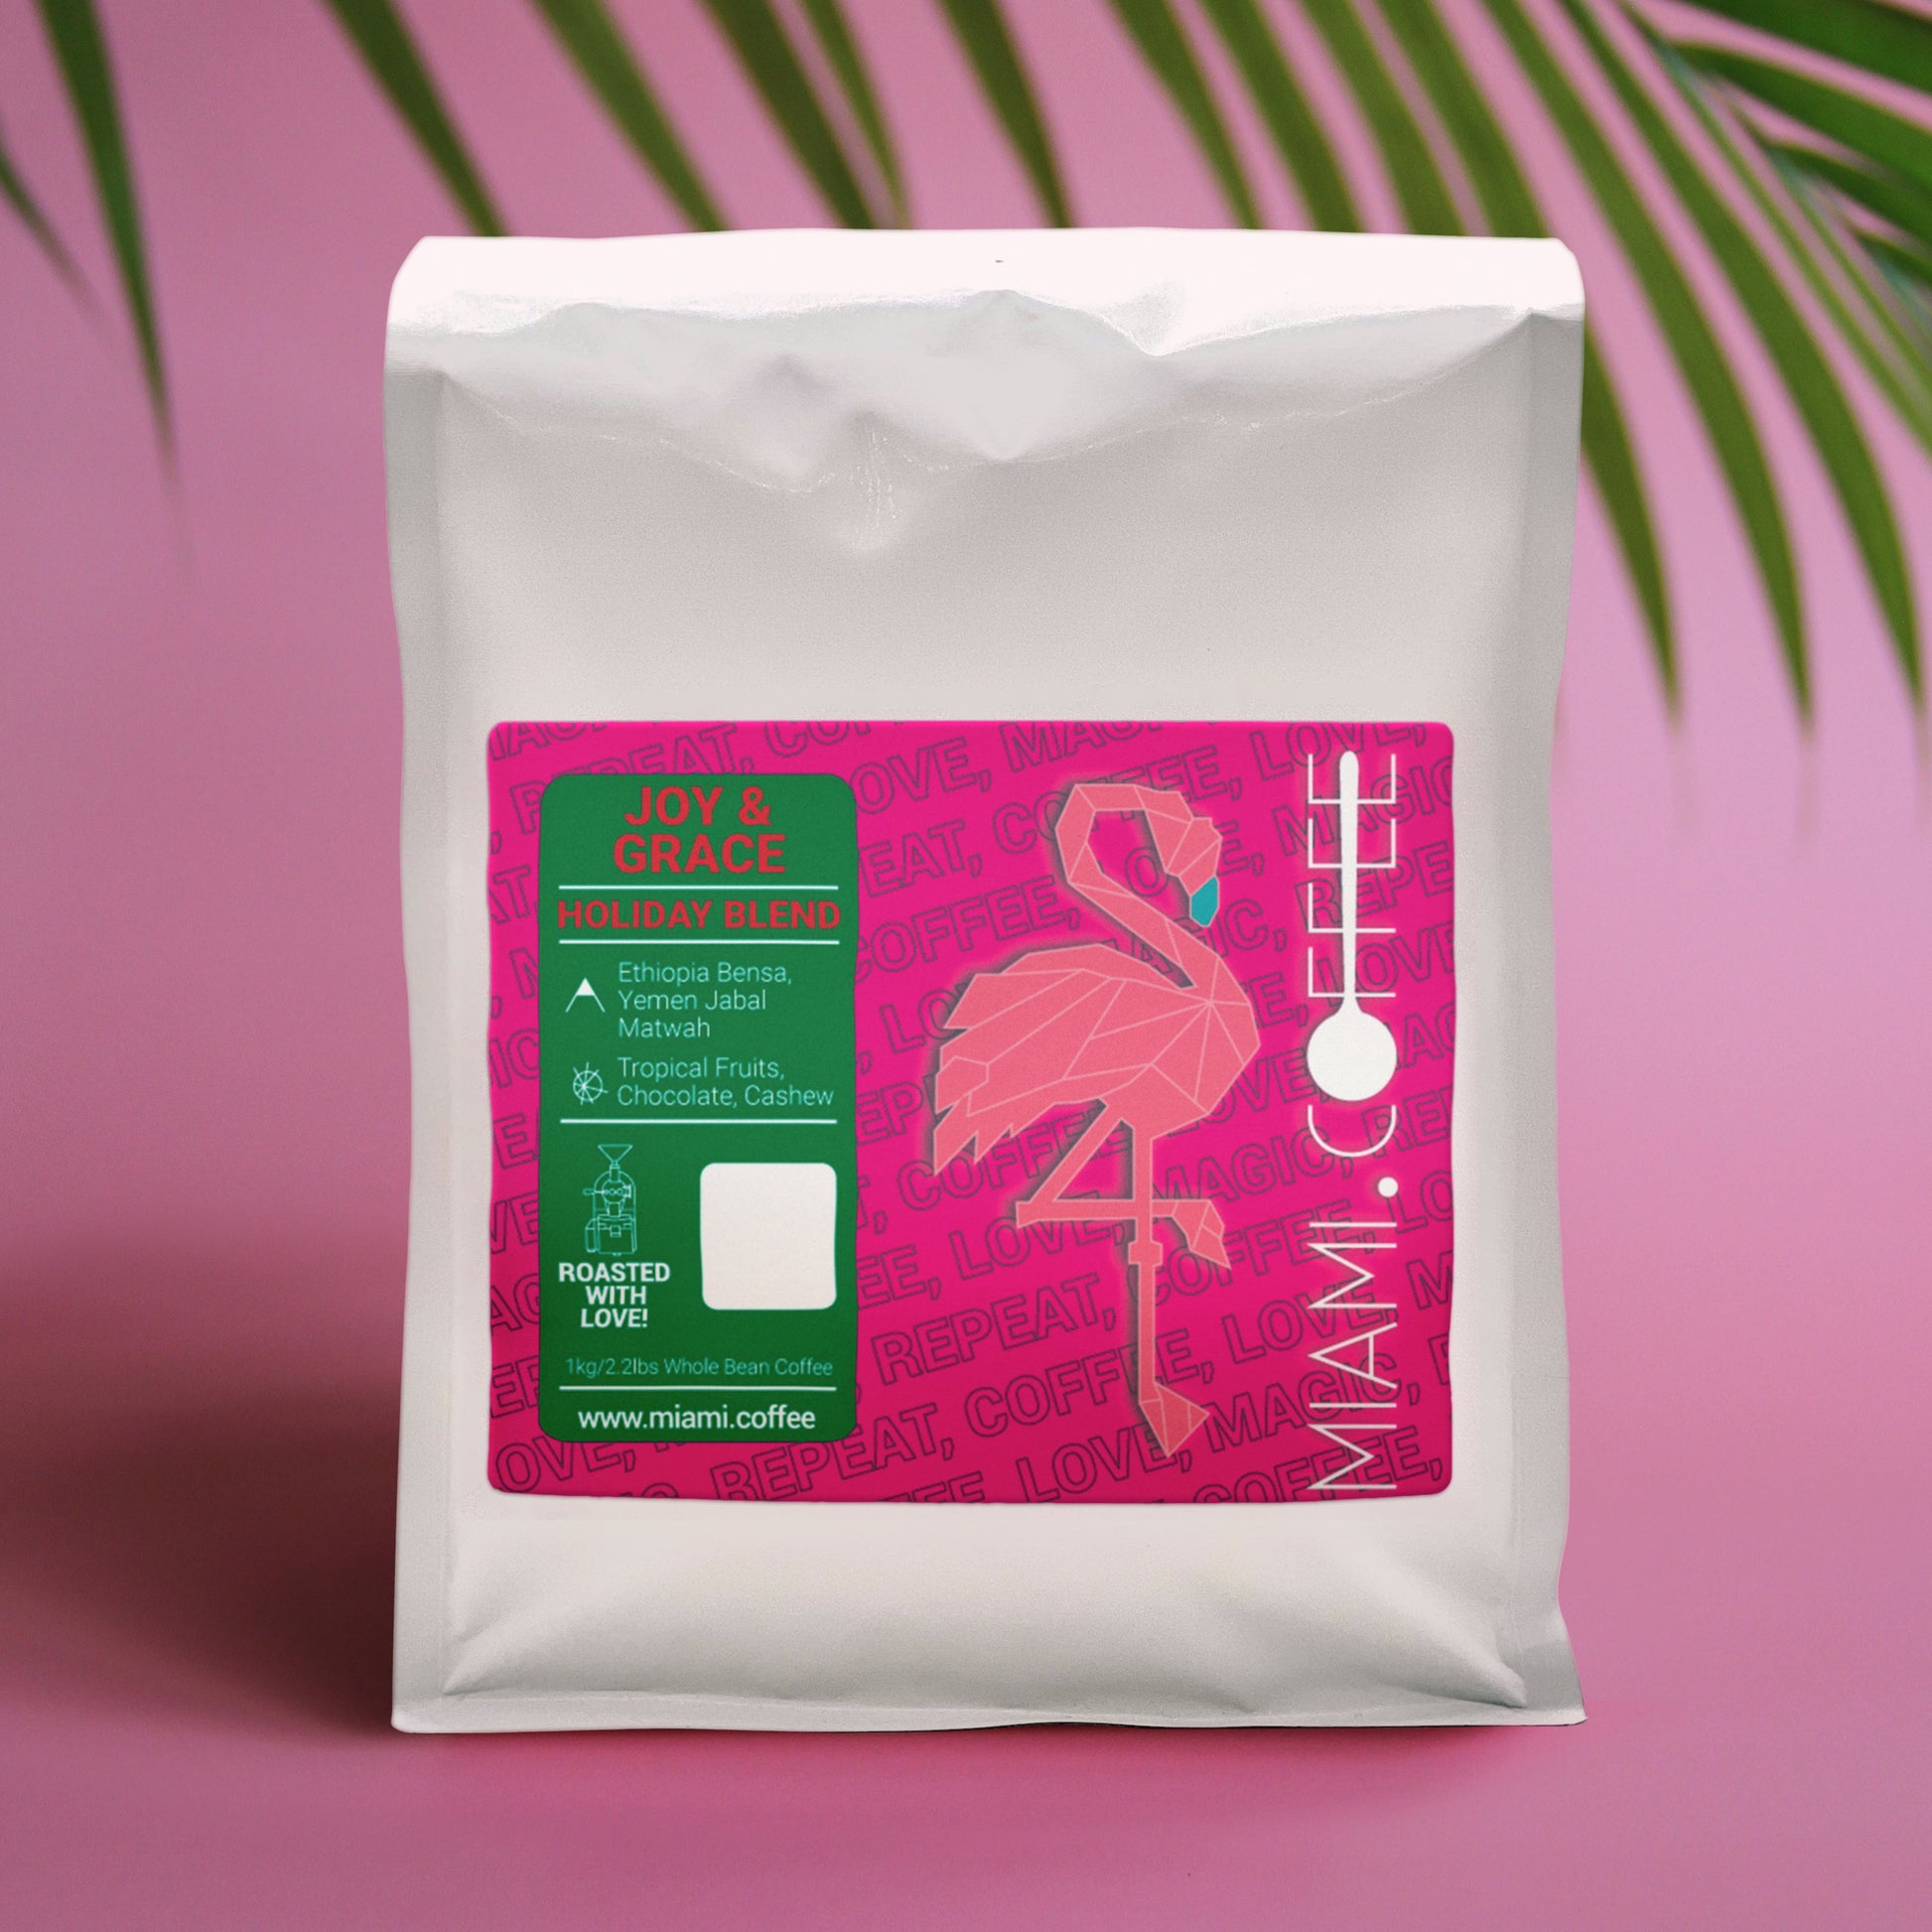 Joy & Grace Holiday Blend 1 Kilogram bag by Miami (dot) Coffee. Flavor descriptors: Tropical Fruits, Chocolate, Cashew